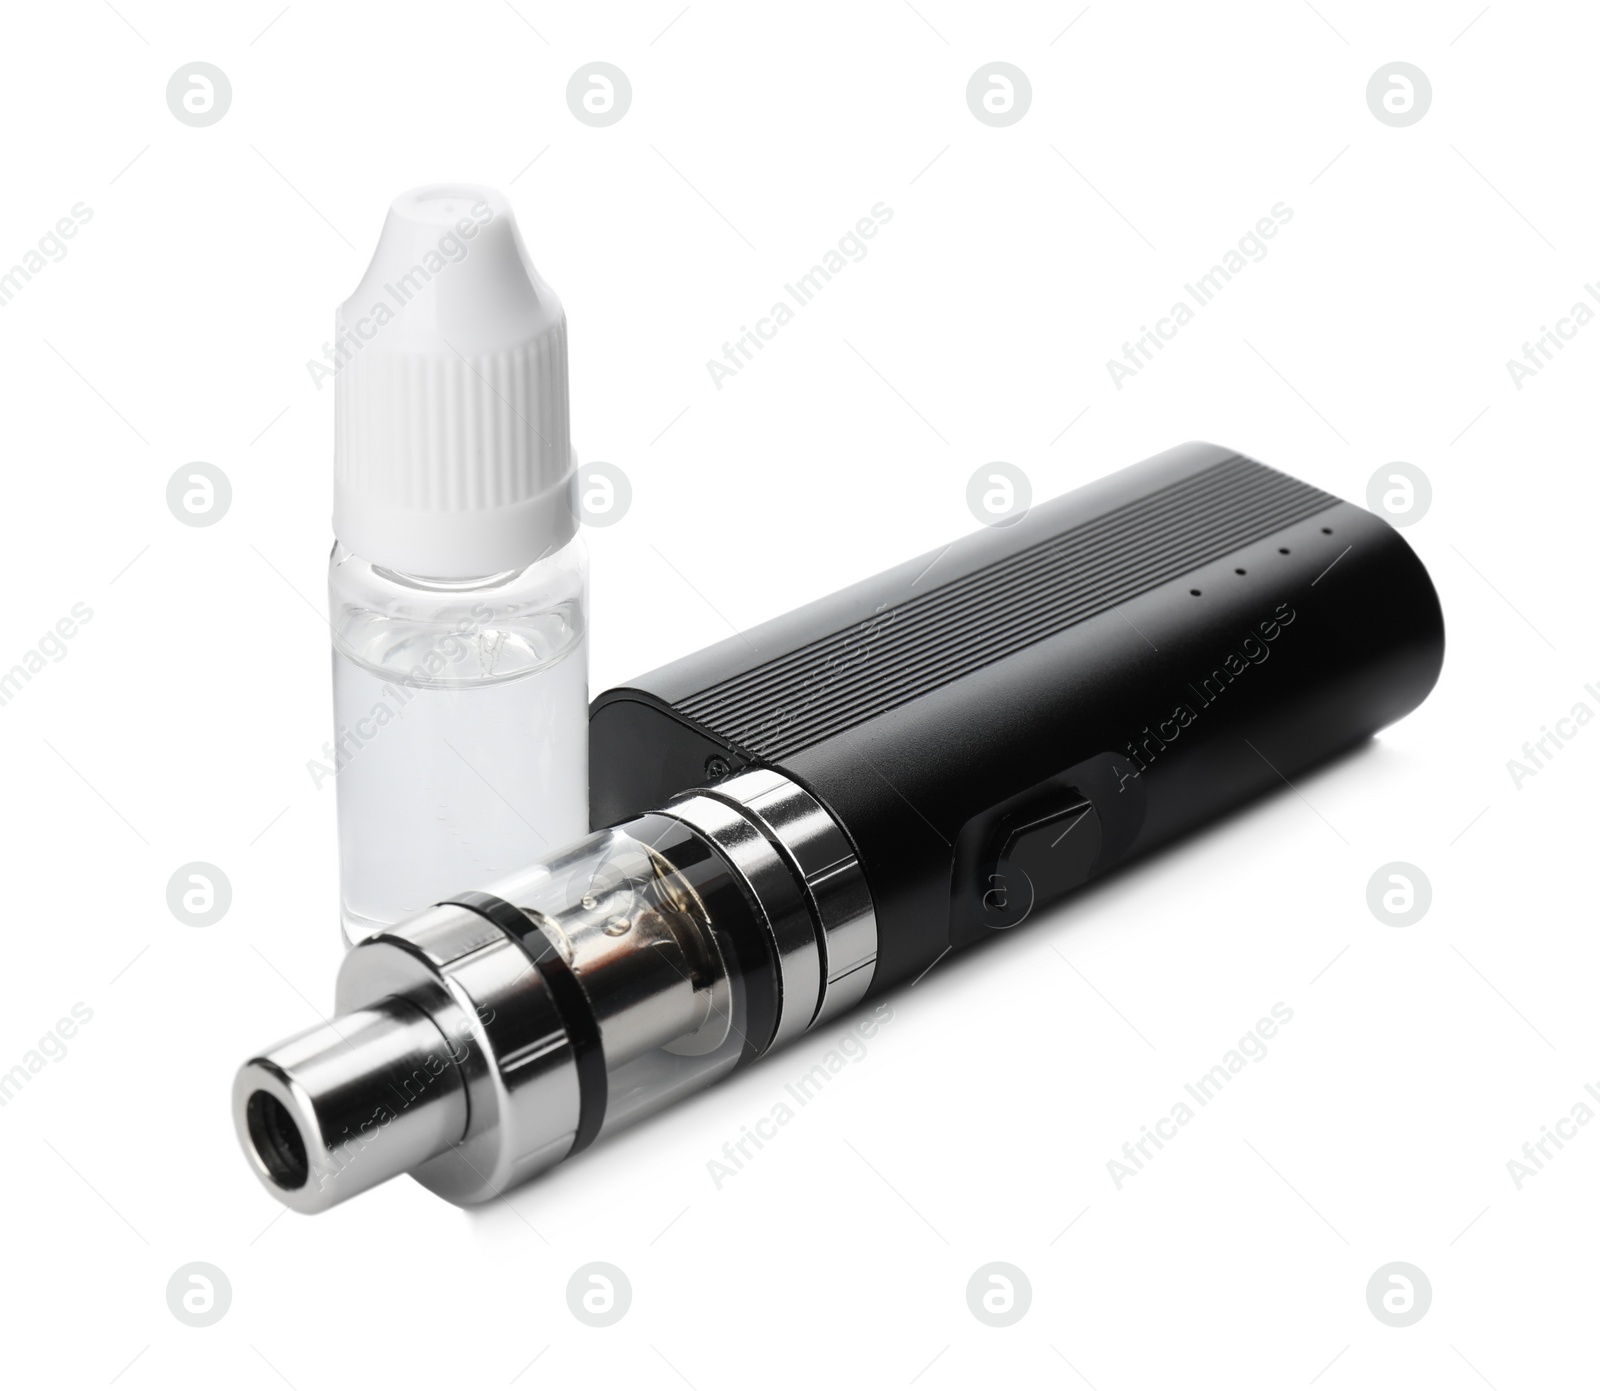 Photo of Electronic smoking device and vaping liquid on white background